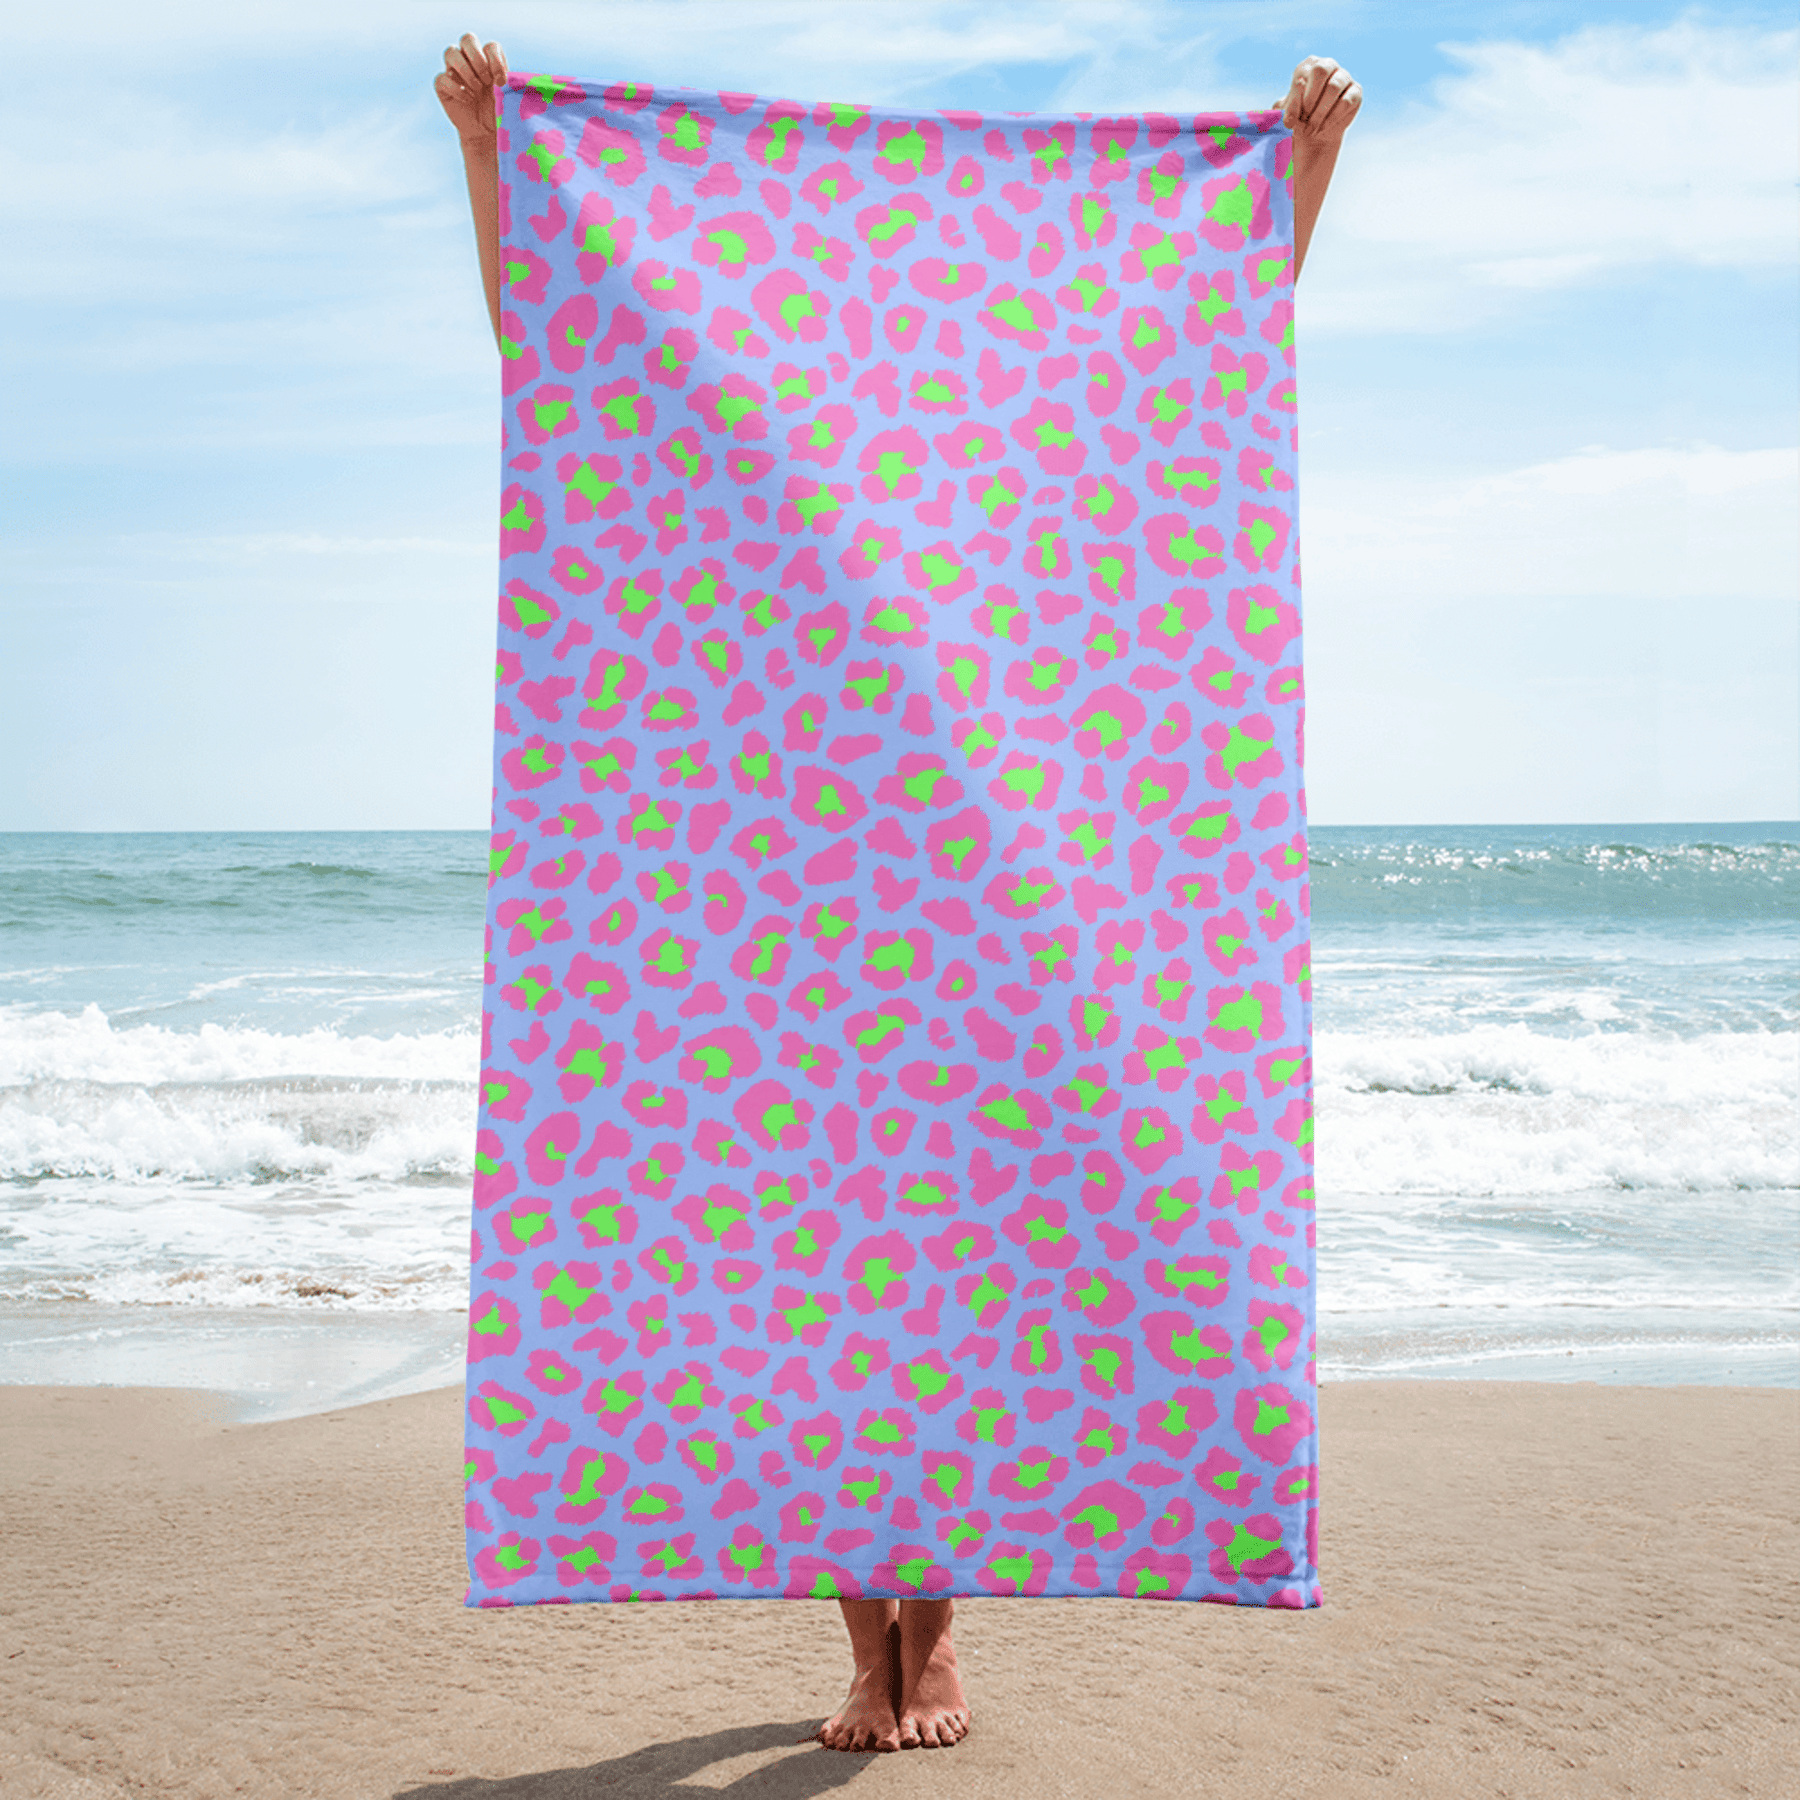 Lime Leopard Beach Towel - Goth Cloth Co.5518887_8874